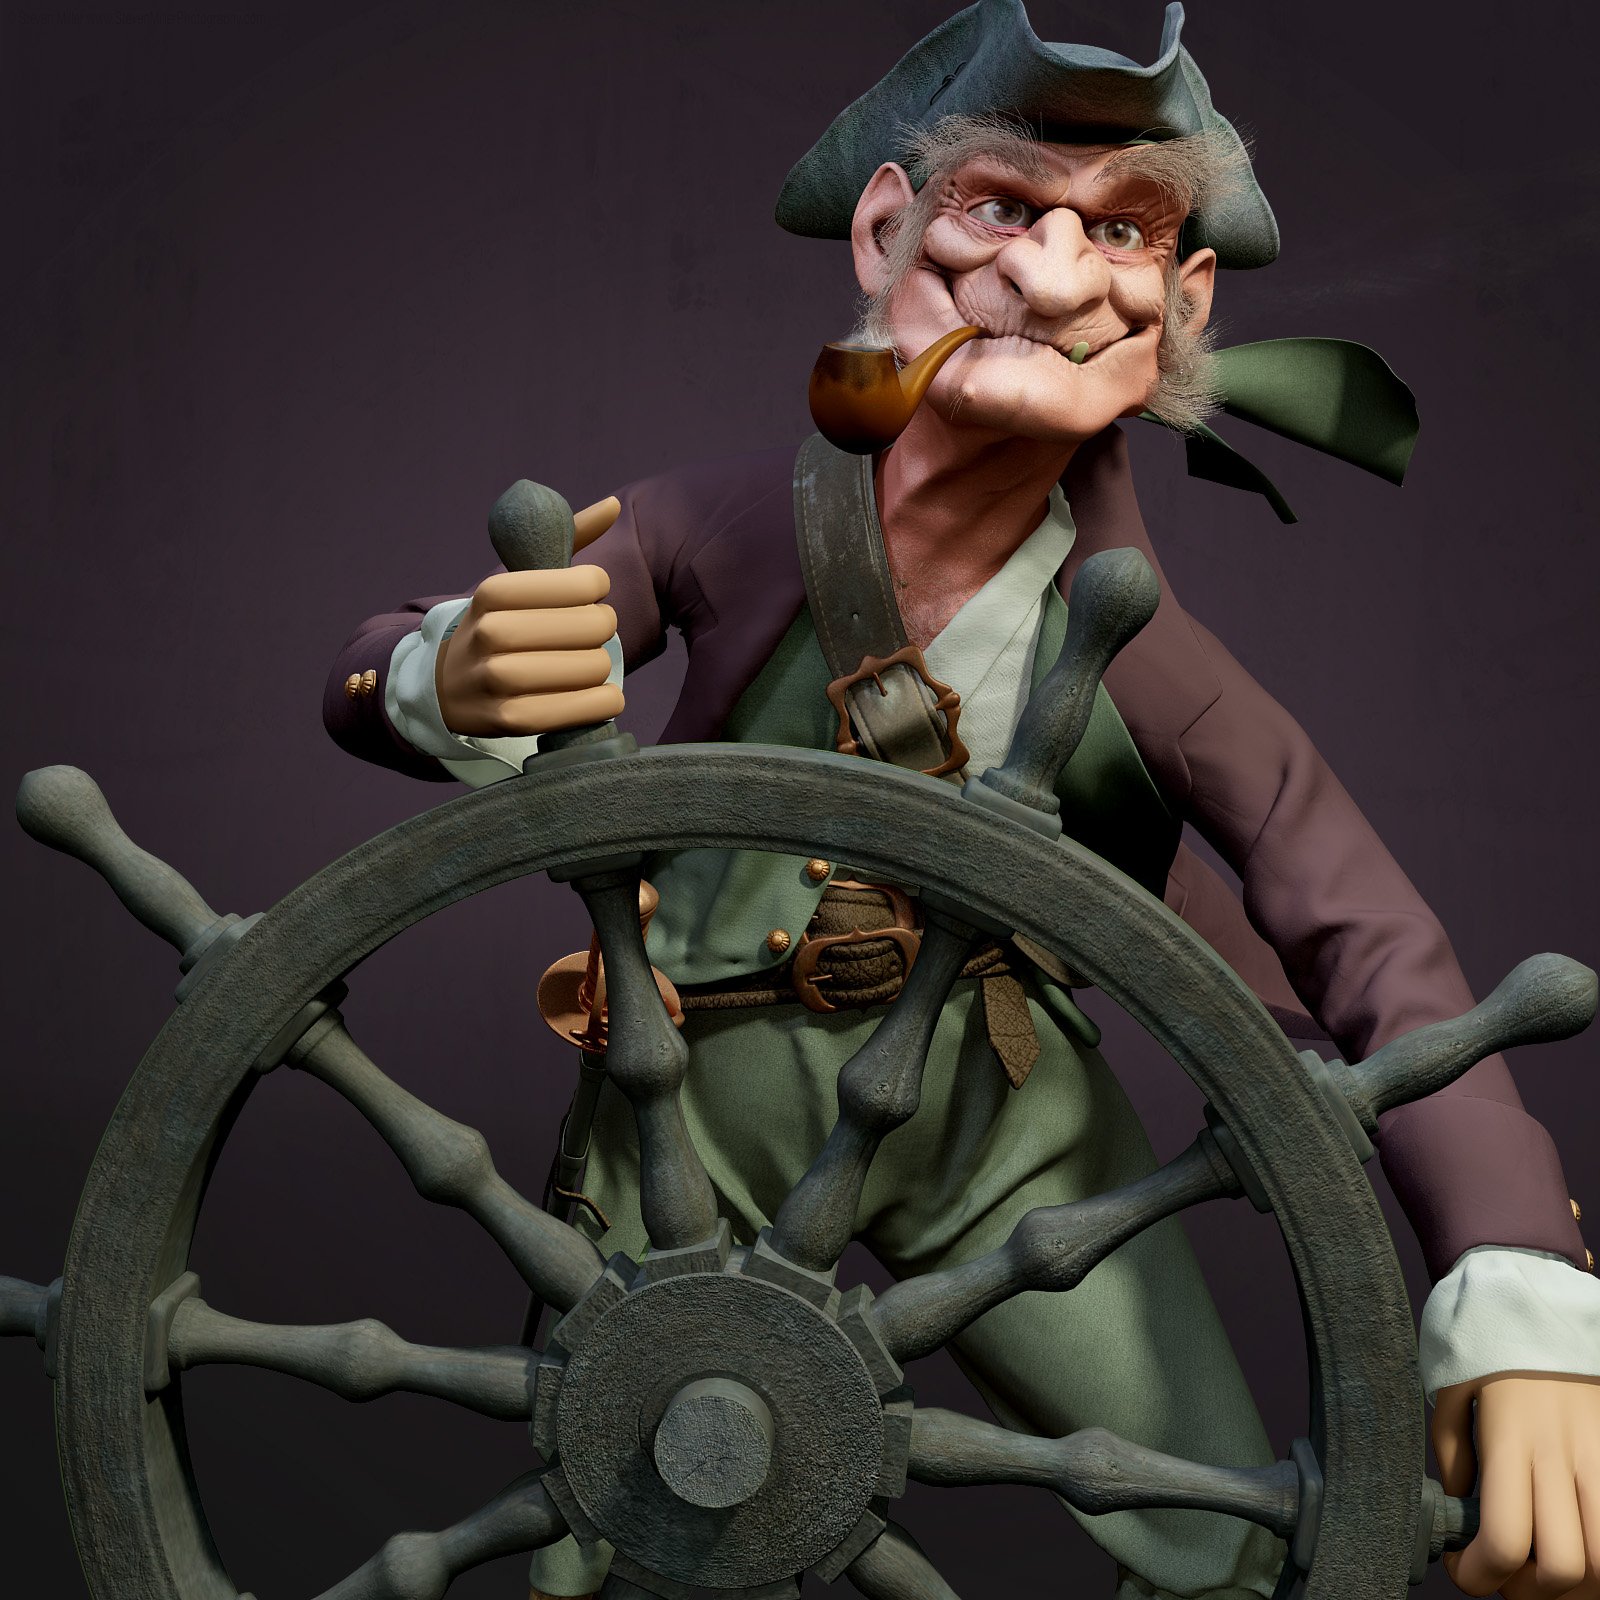 Пират за штурвалом